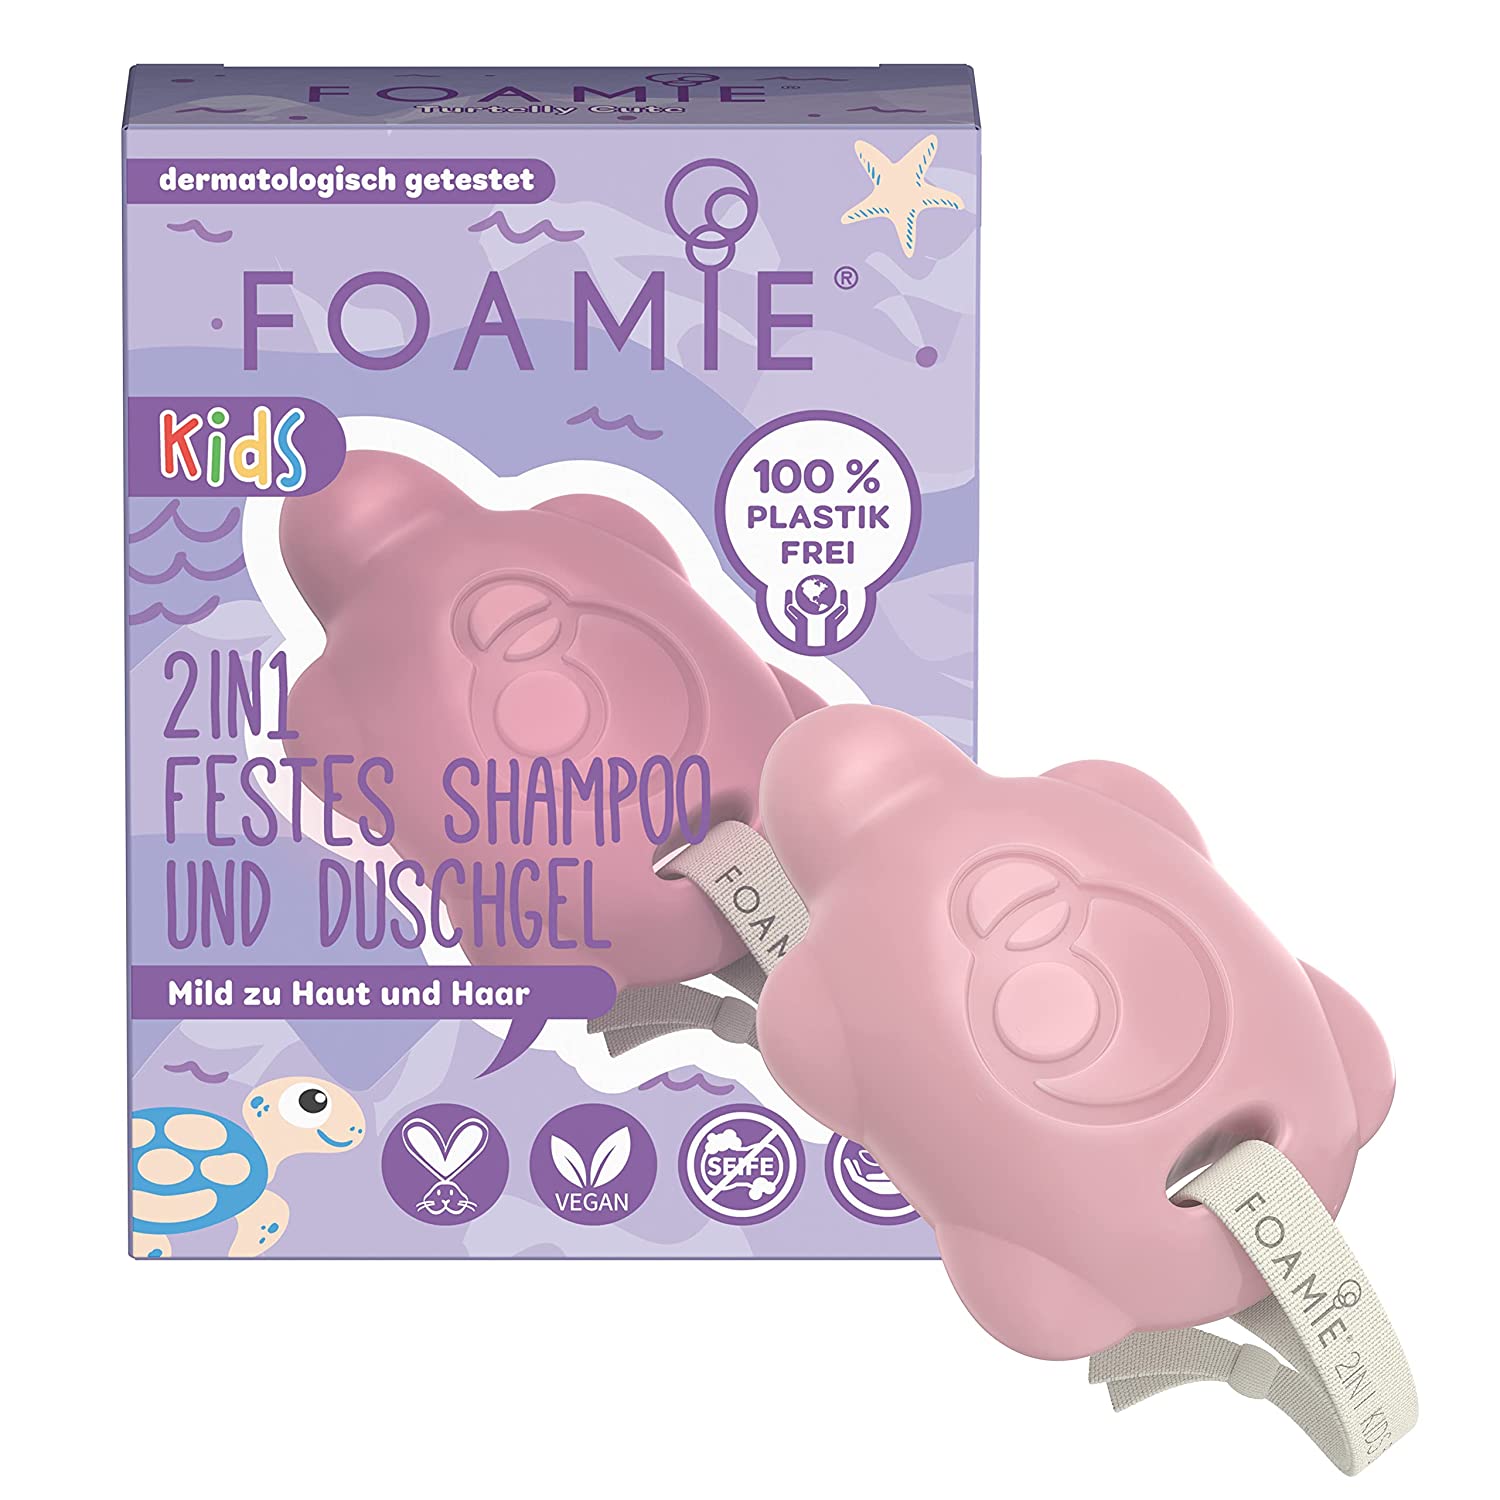 Foamie Kids 2in1 Festes Shampoo und Duschgel Turtelly Cute 80g